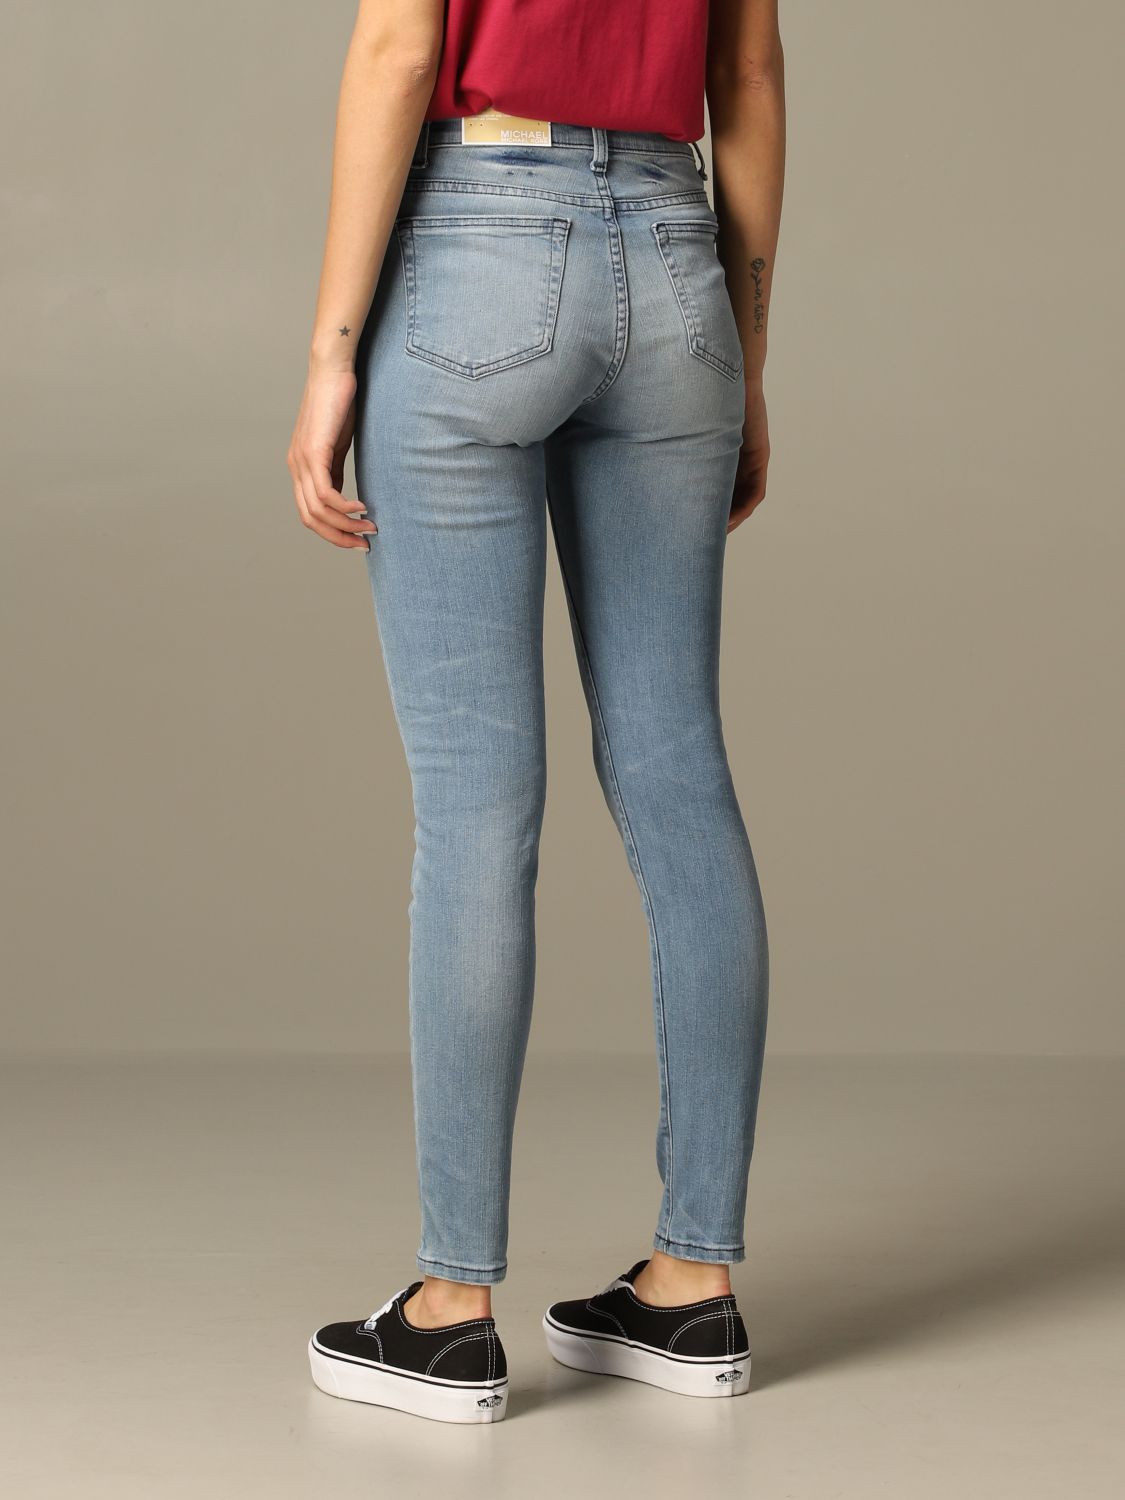 michael kors jeans womens